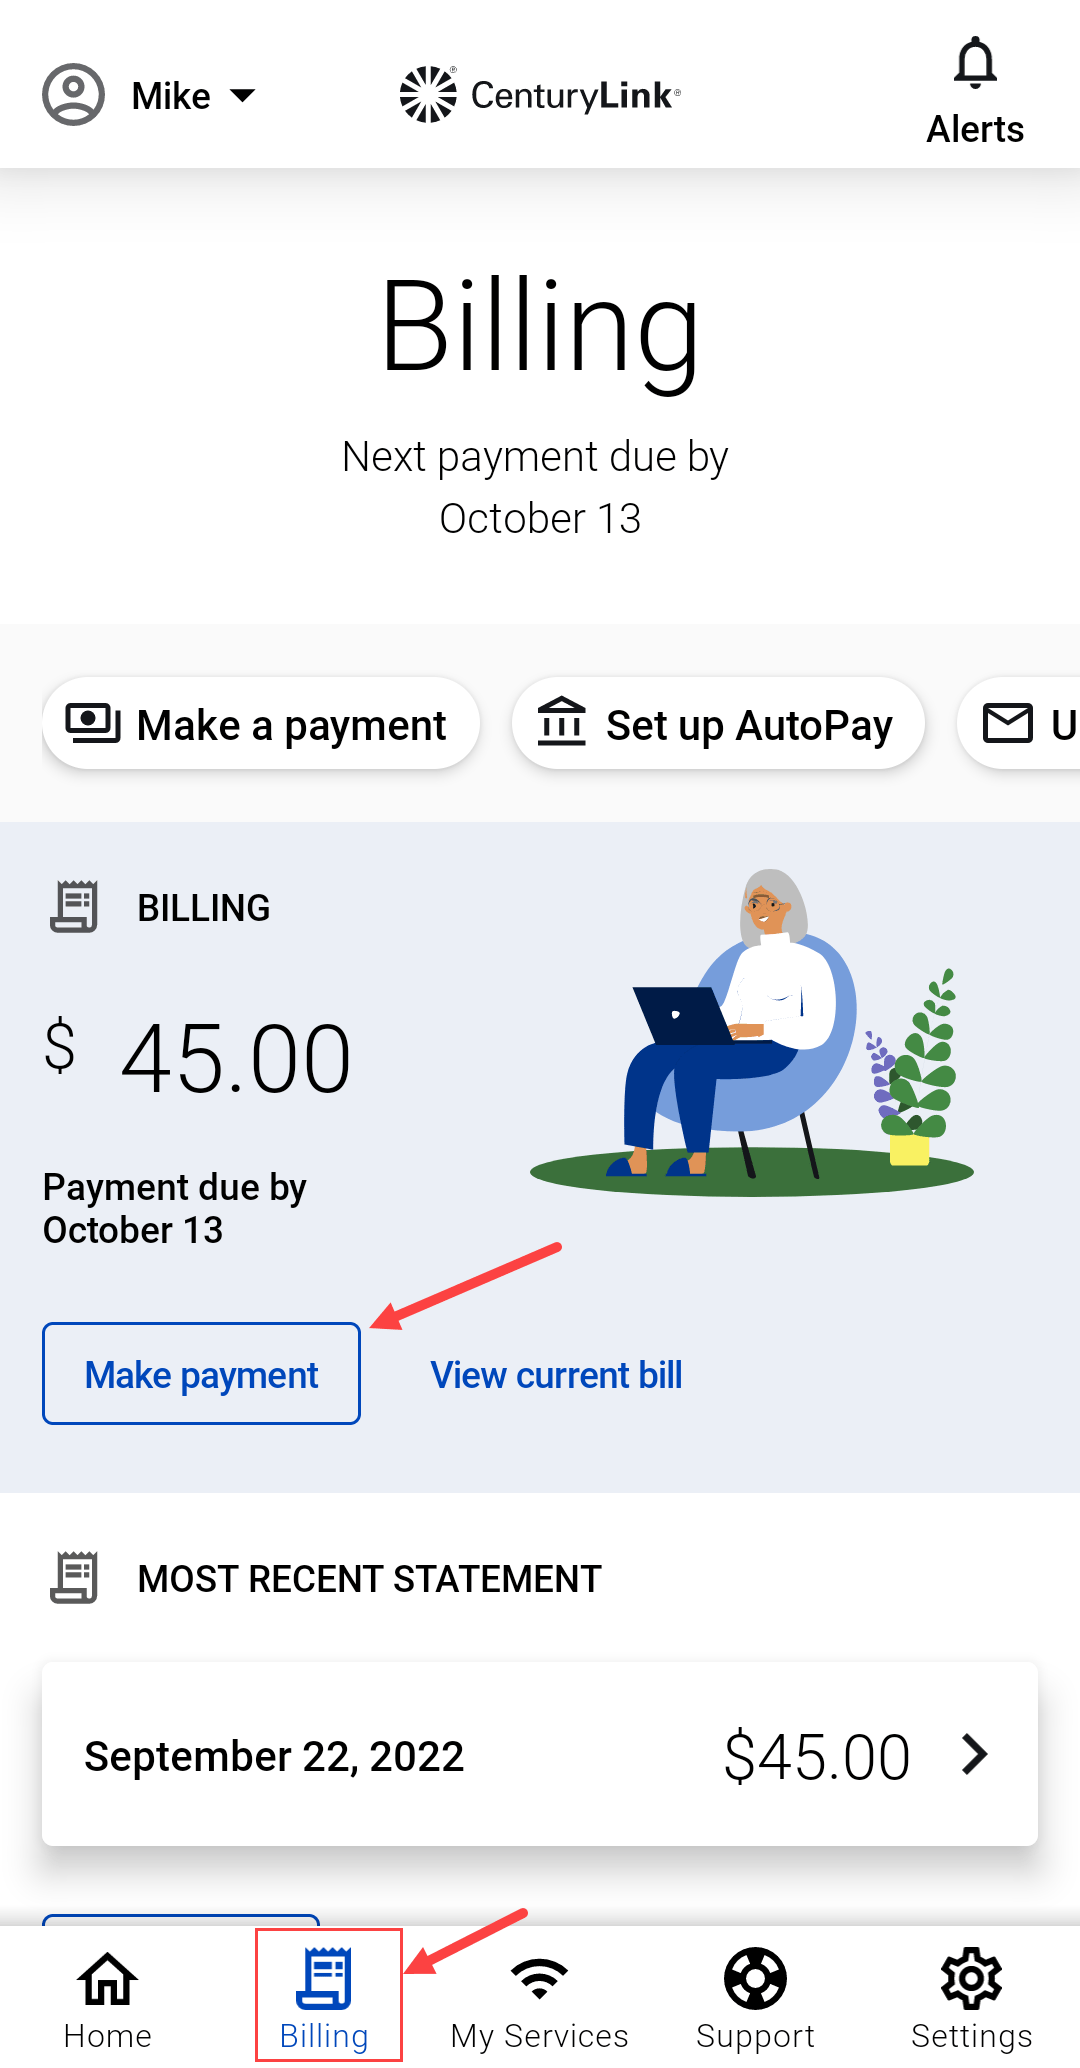 screenshot from Billing screen of app showing Make payment and Billing at bottom menu